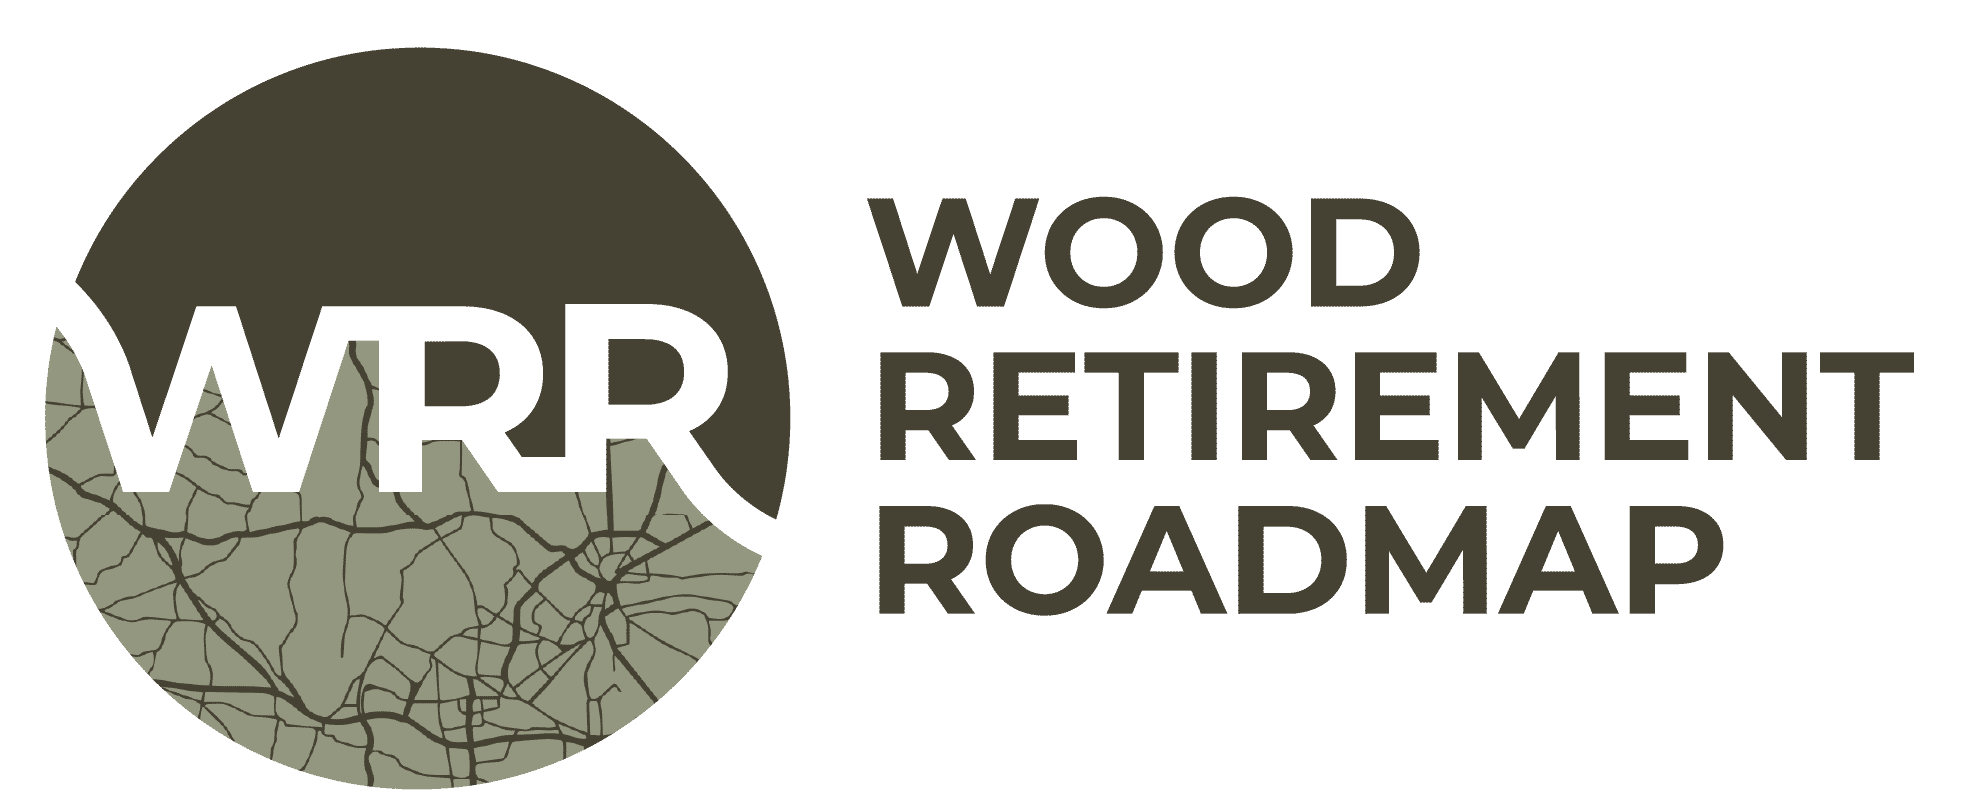 Wood Roadmap Logo Final Horizontal 